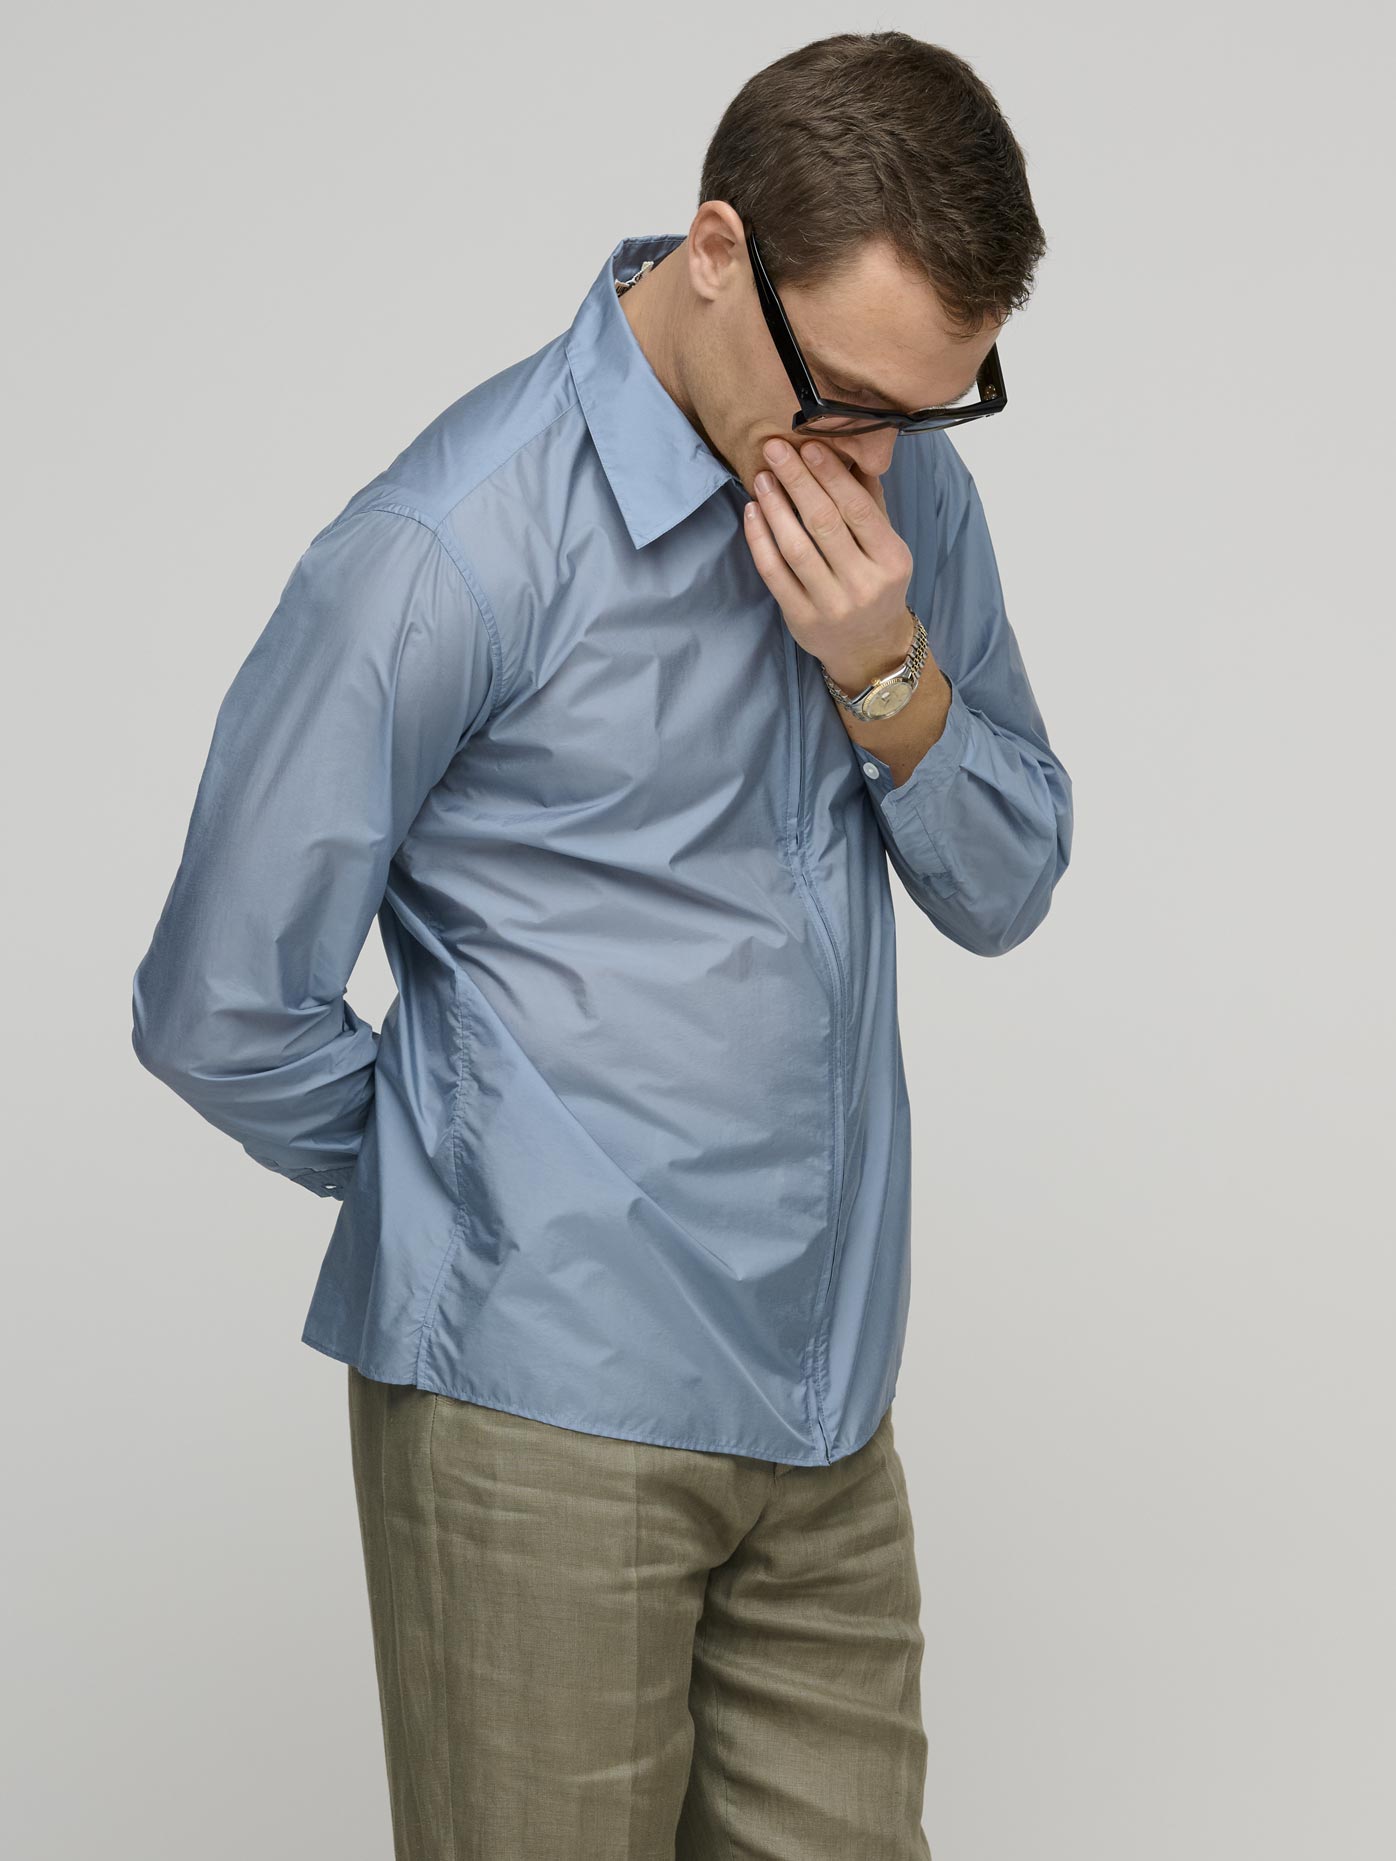 Light Nylon Zip Shirt, Blue Gray